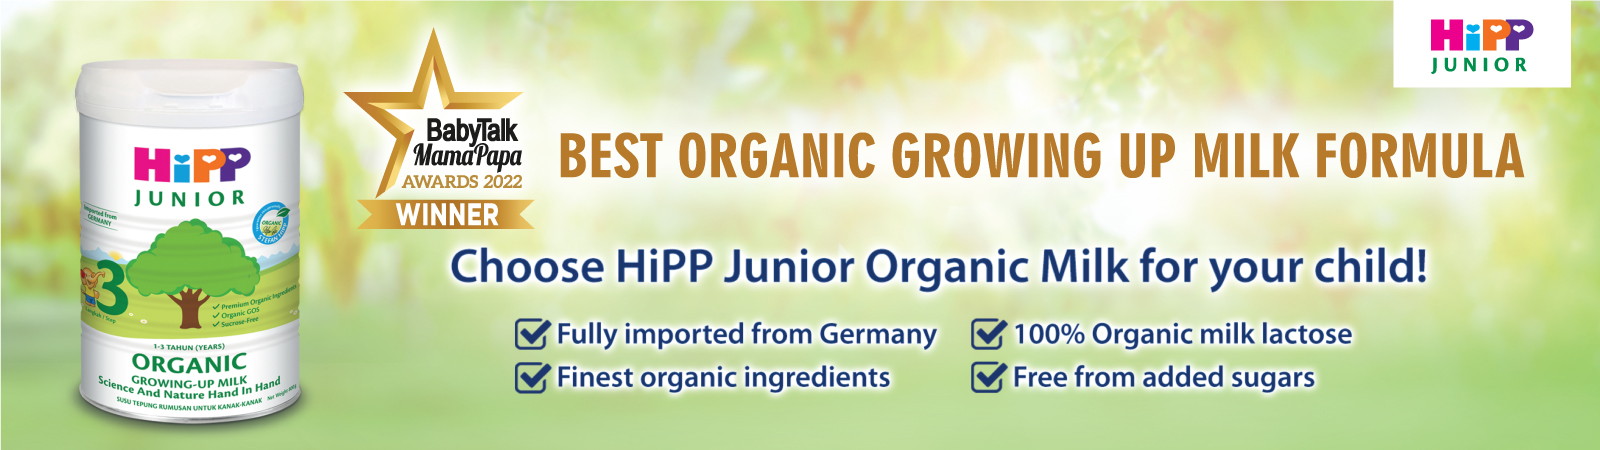 HiPP JUNIOR Organic Growing-up Milk